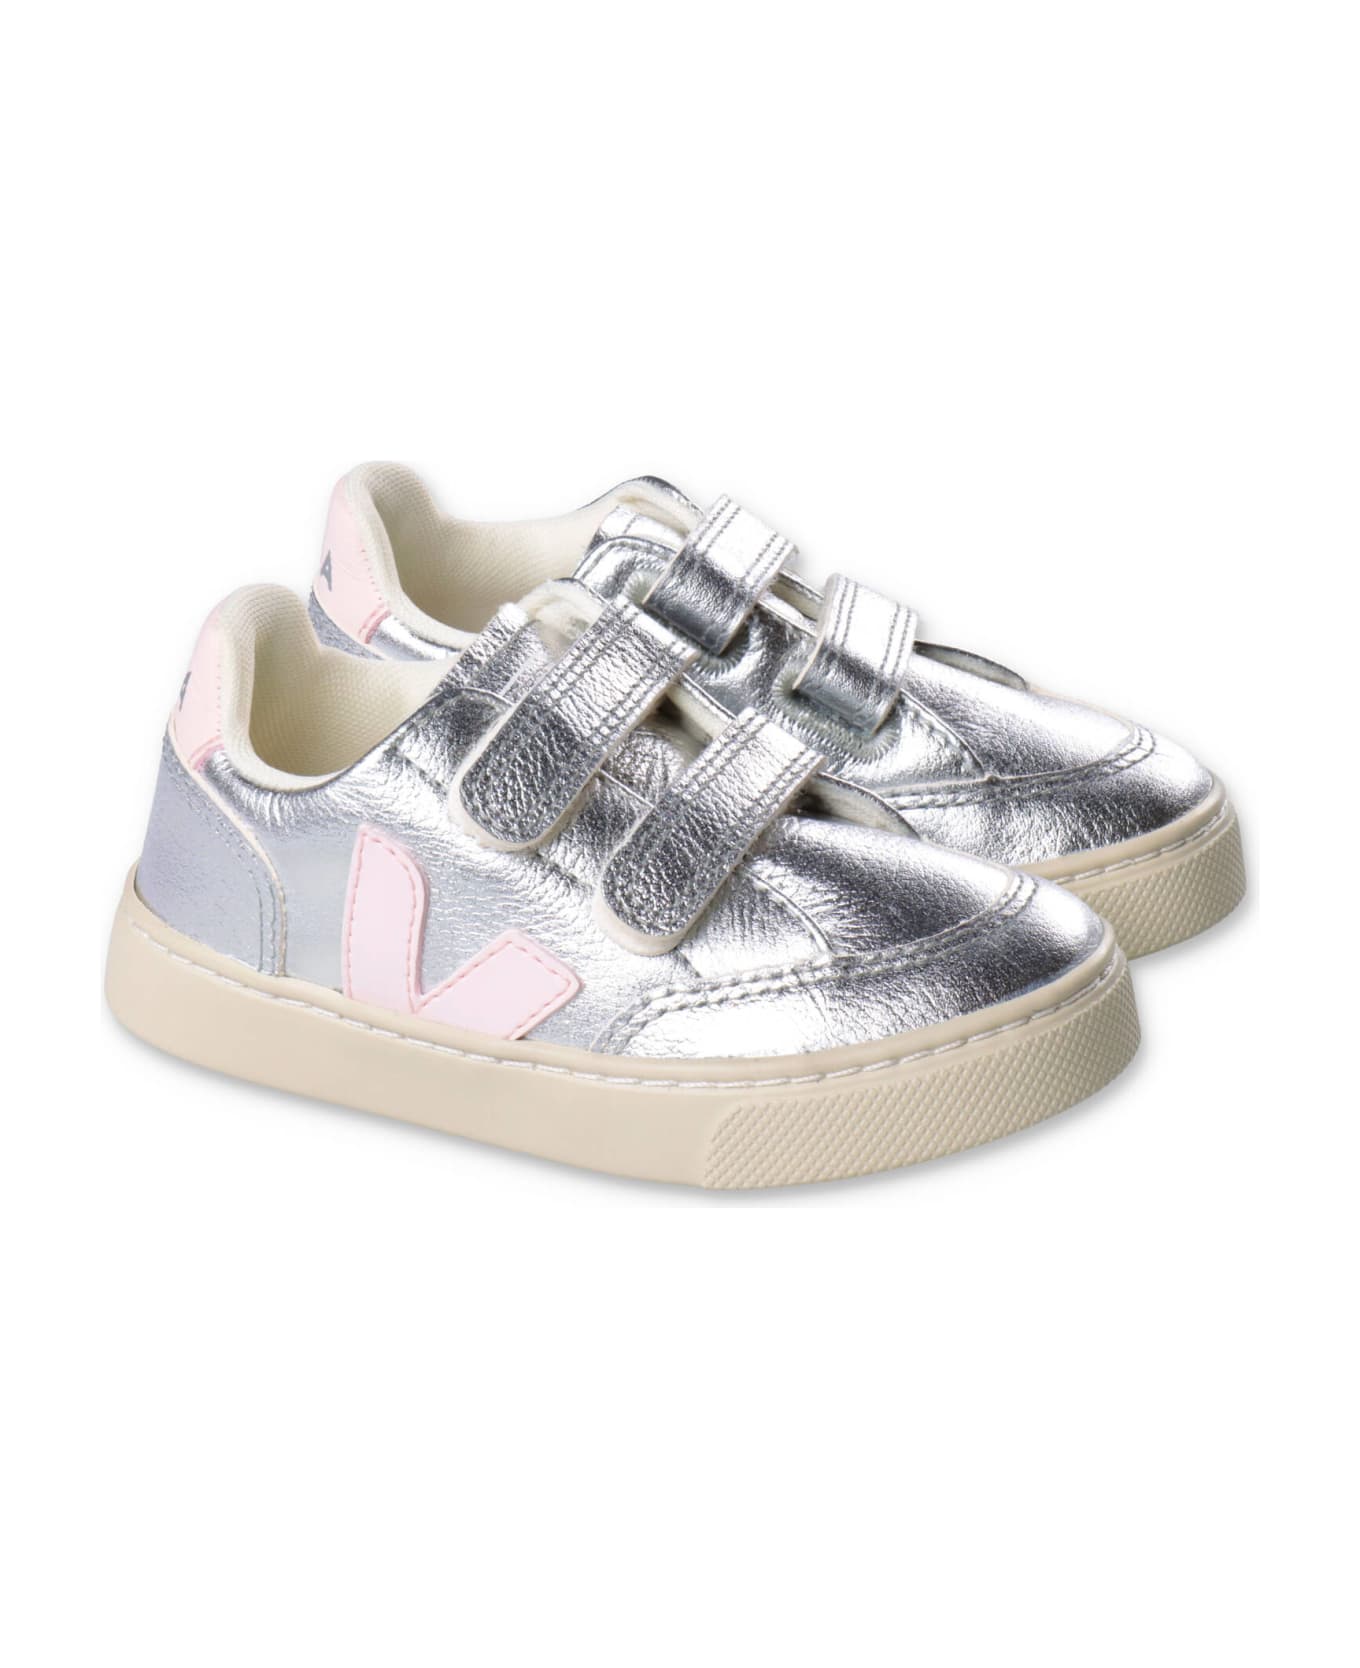 Veja Sneakers Argento In Similpelle Con Velcro Baby Girl - Argento シューズ